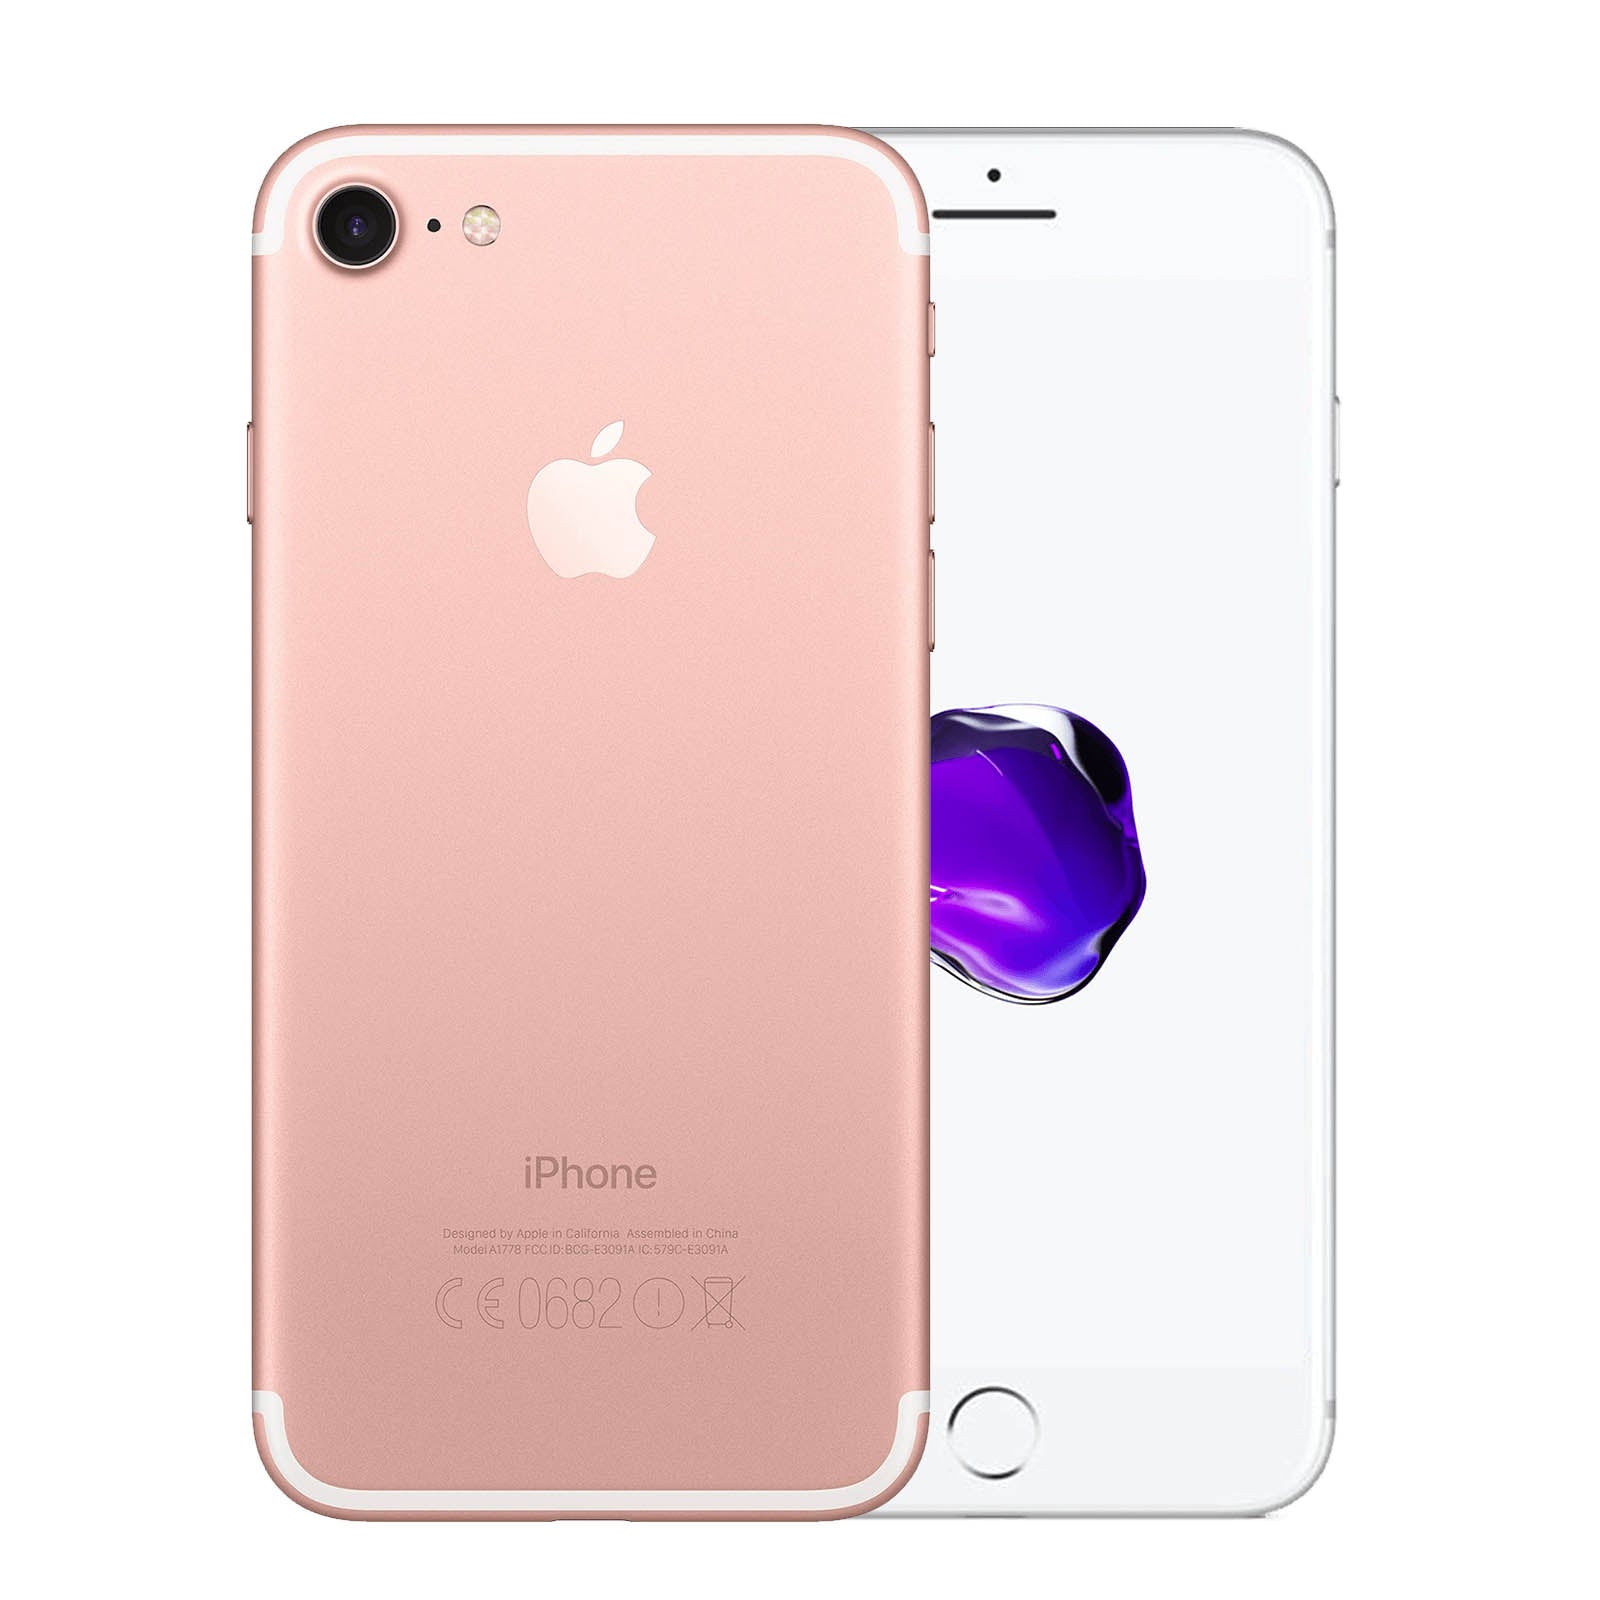 Apple iPhone 7 256GB Rose Gold Good - Unlocked